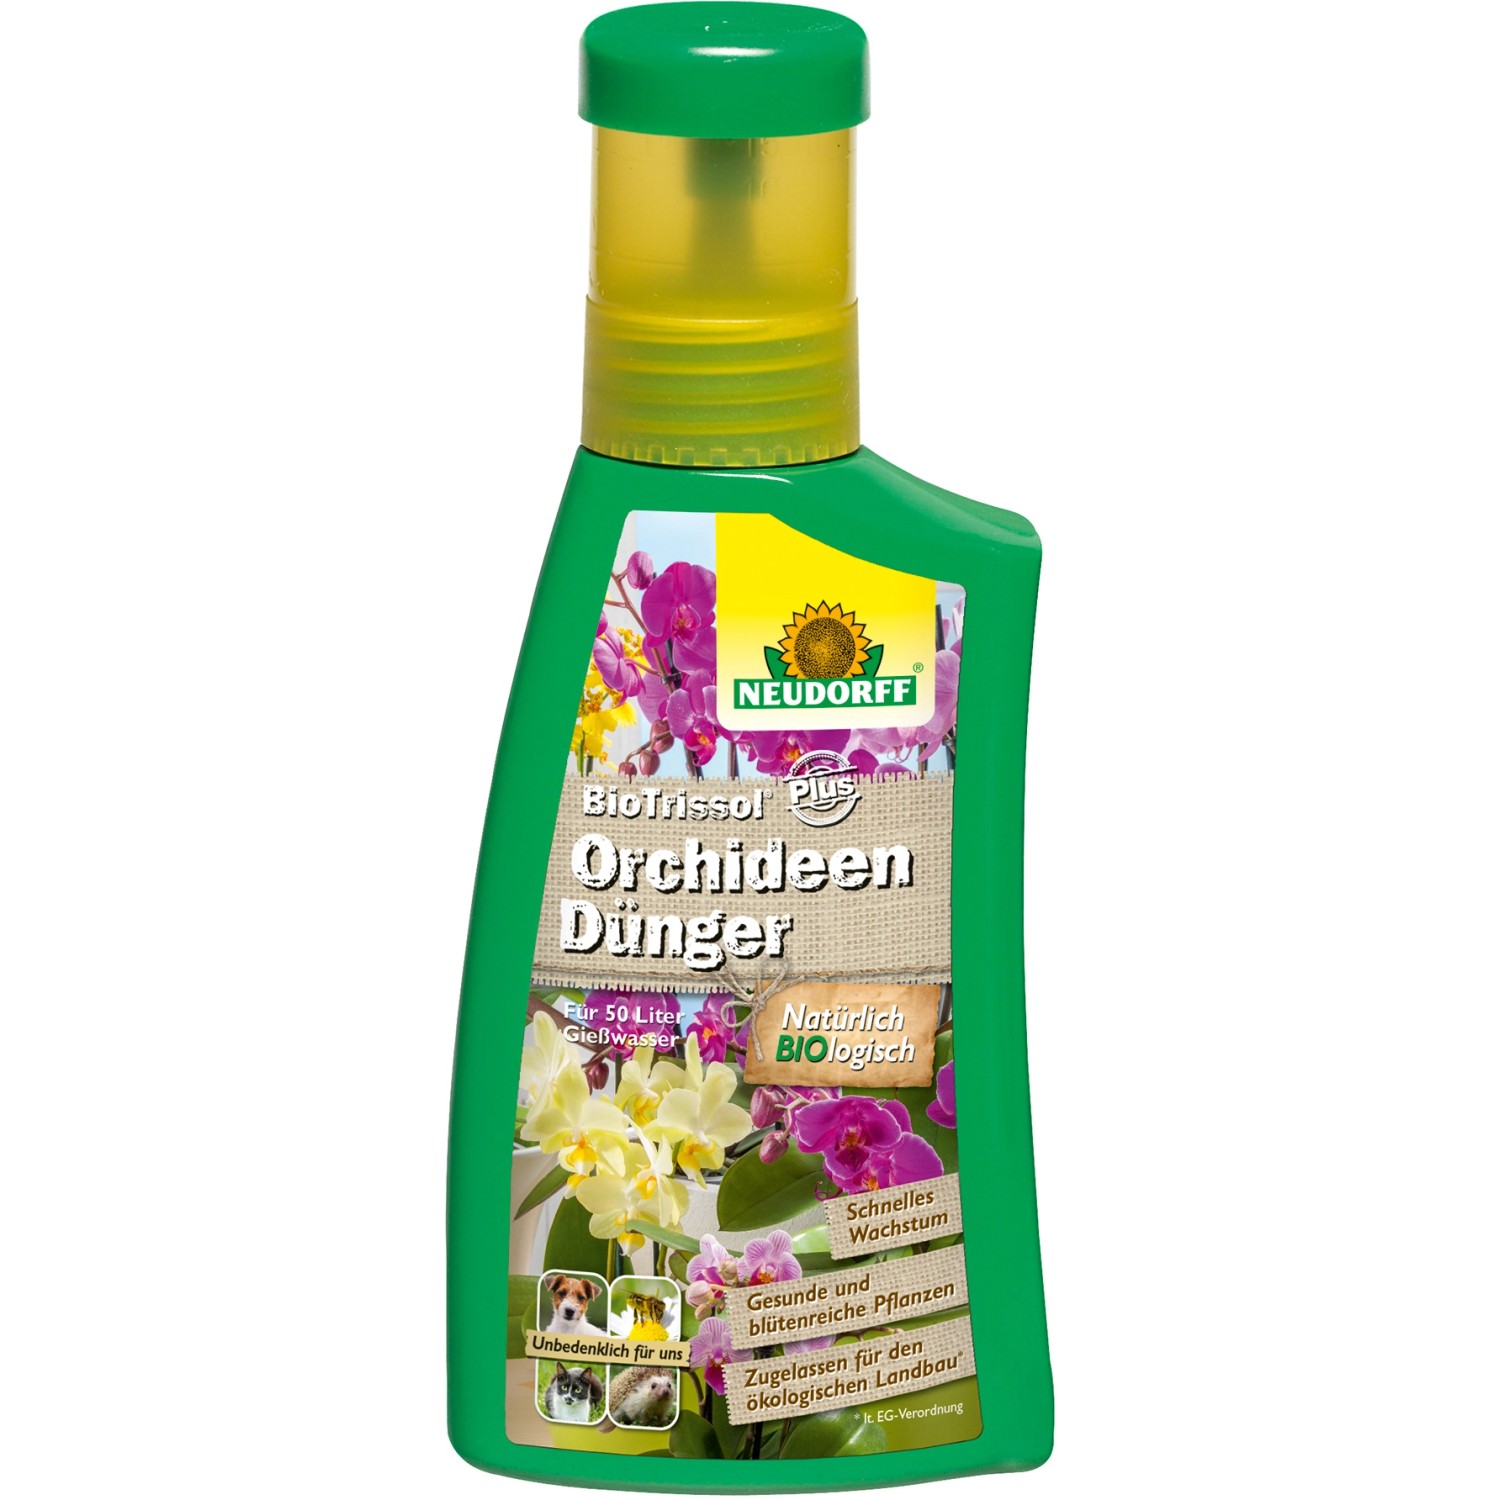 Neudorff Bio Trissol Plus Orchideen-Dünger 250 ml